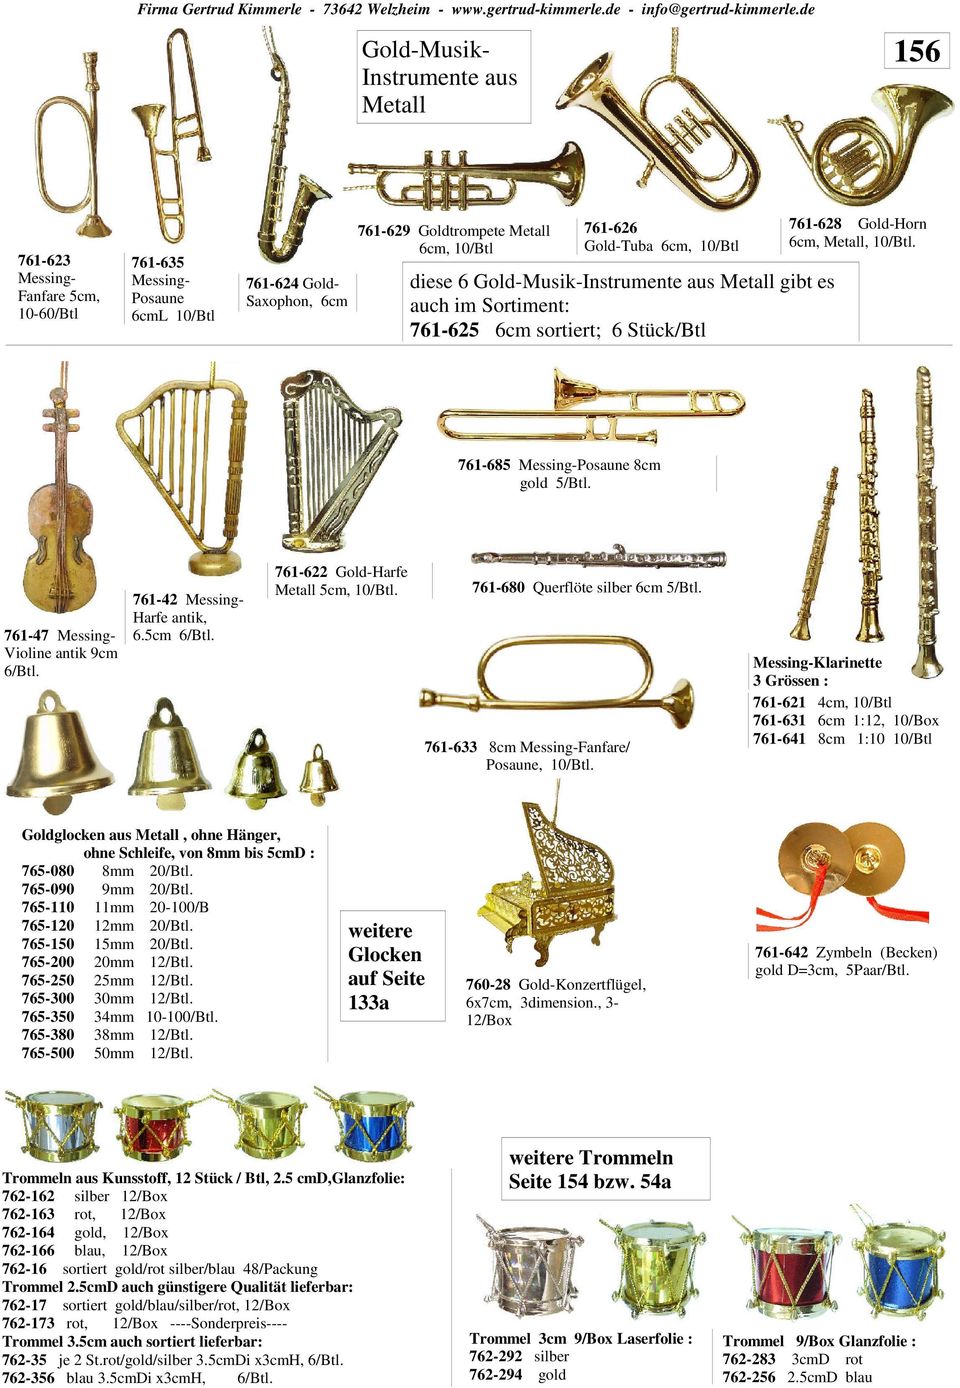 Gold-Tuba 6cm, 10/Btl diese 6 Gold-Musik-Instrumente aus Metall gibt es auch im Sortiment: 761-625 6cm sortiert; 6 Stück/Btl 761-628 Gold-Horn 6cm, Metall, 10/Btl.